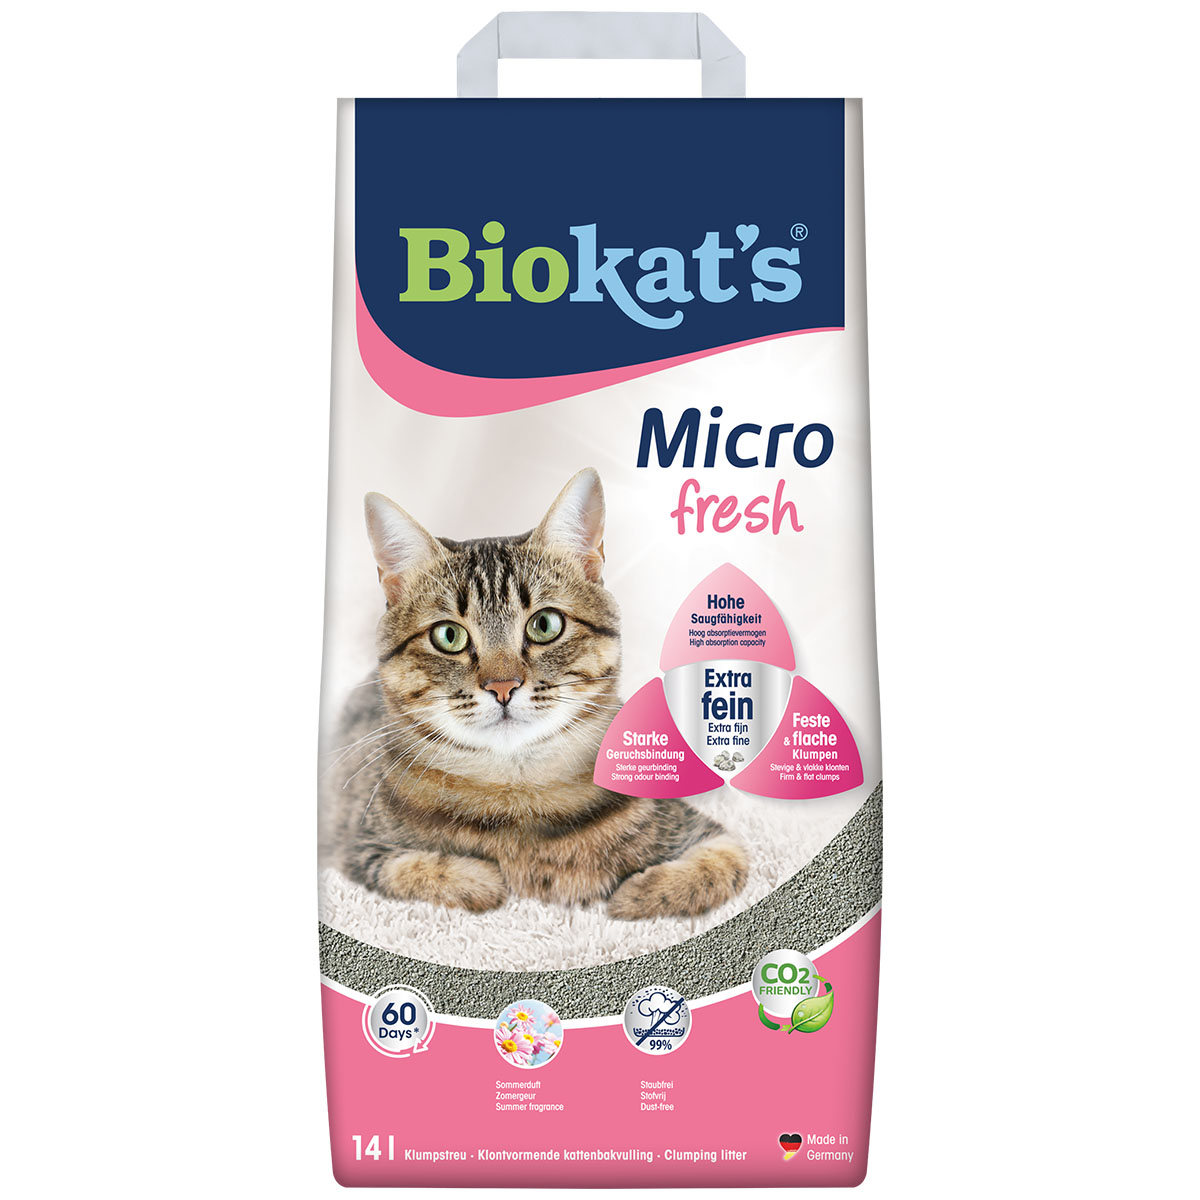 biokats micro fresh 14l